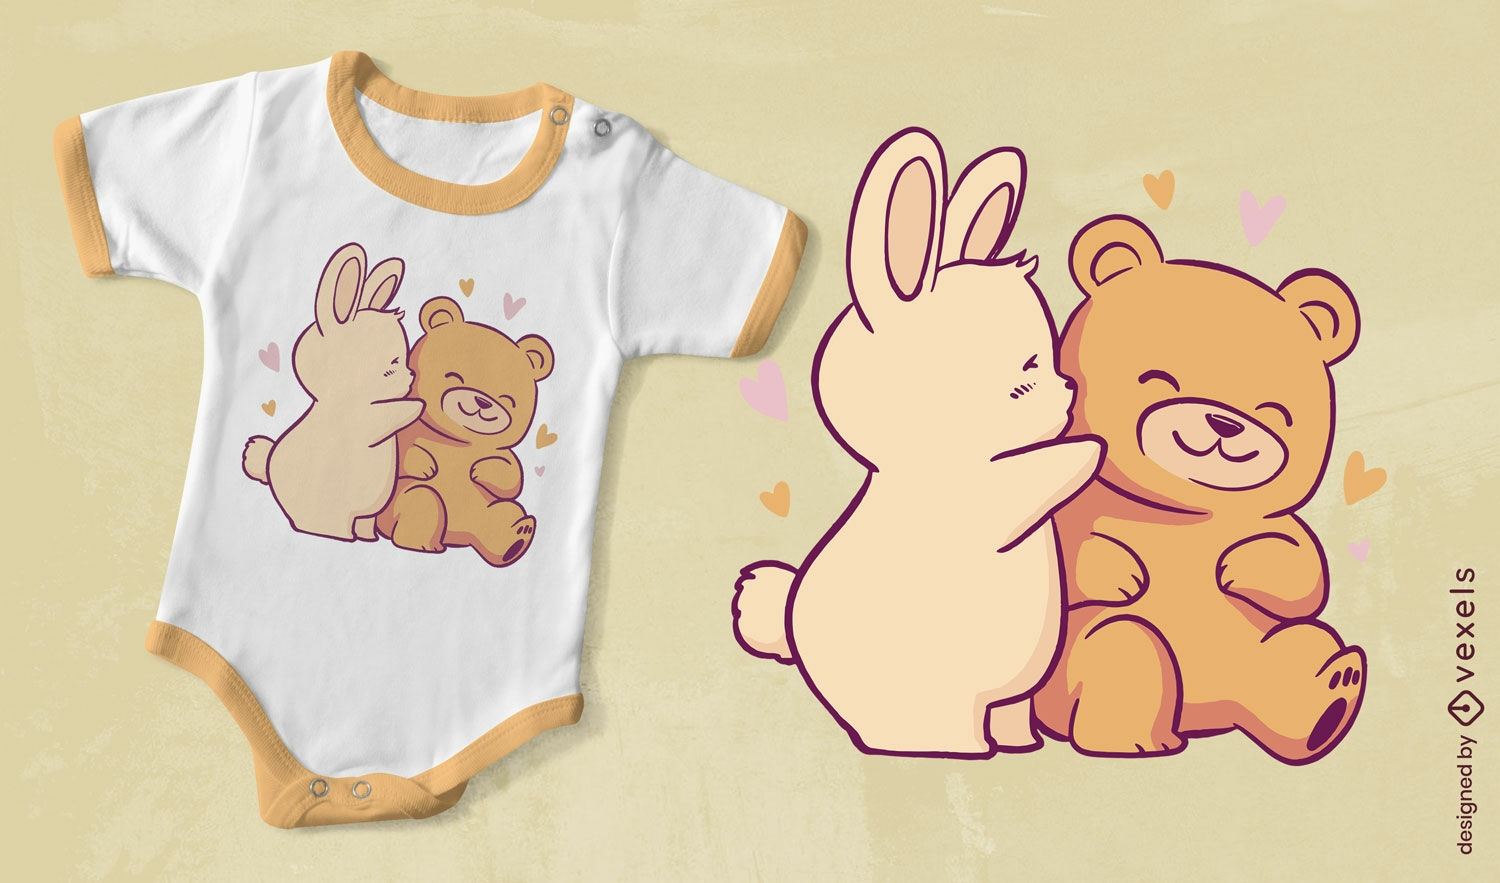 Cute teddy bears t-shirt design